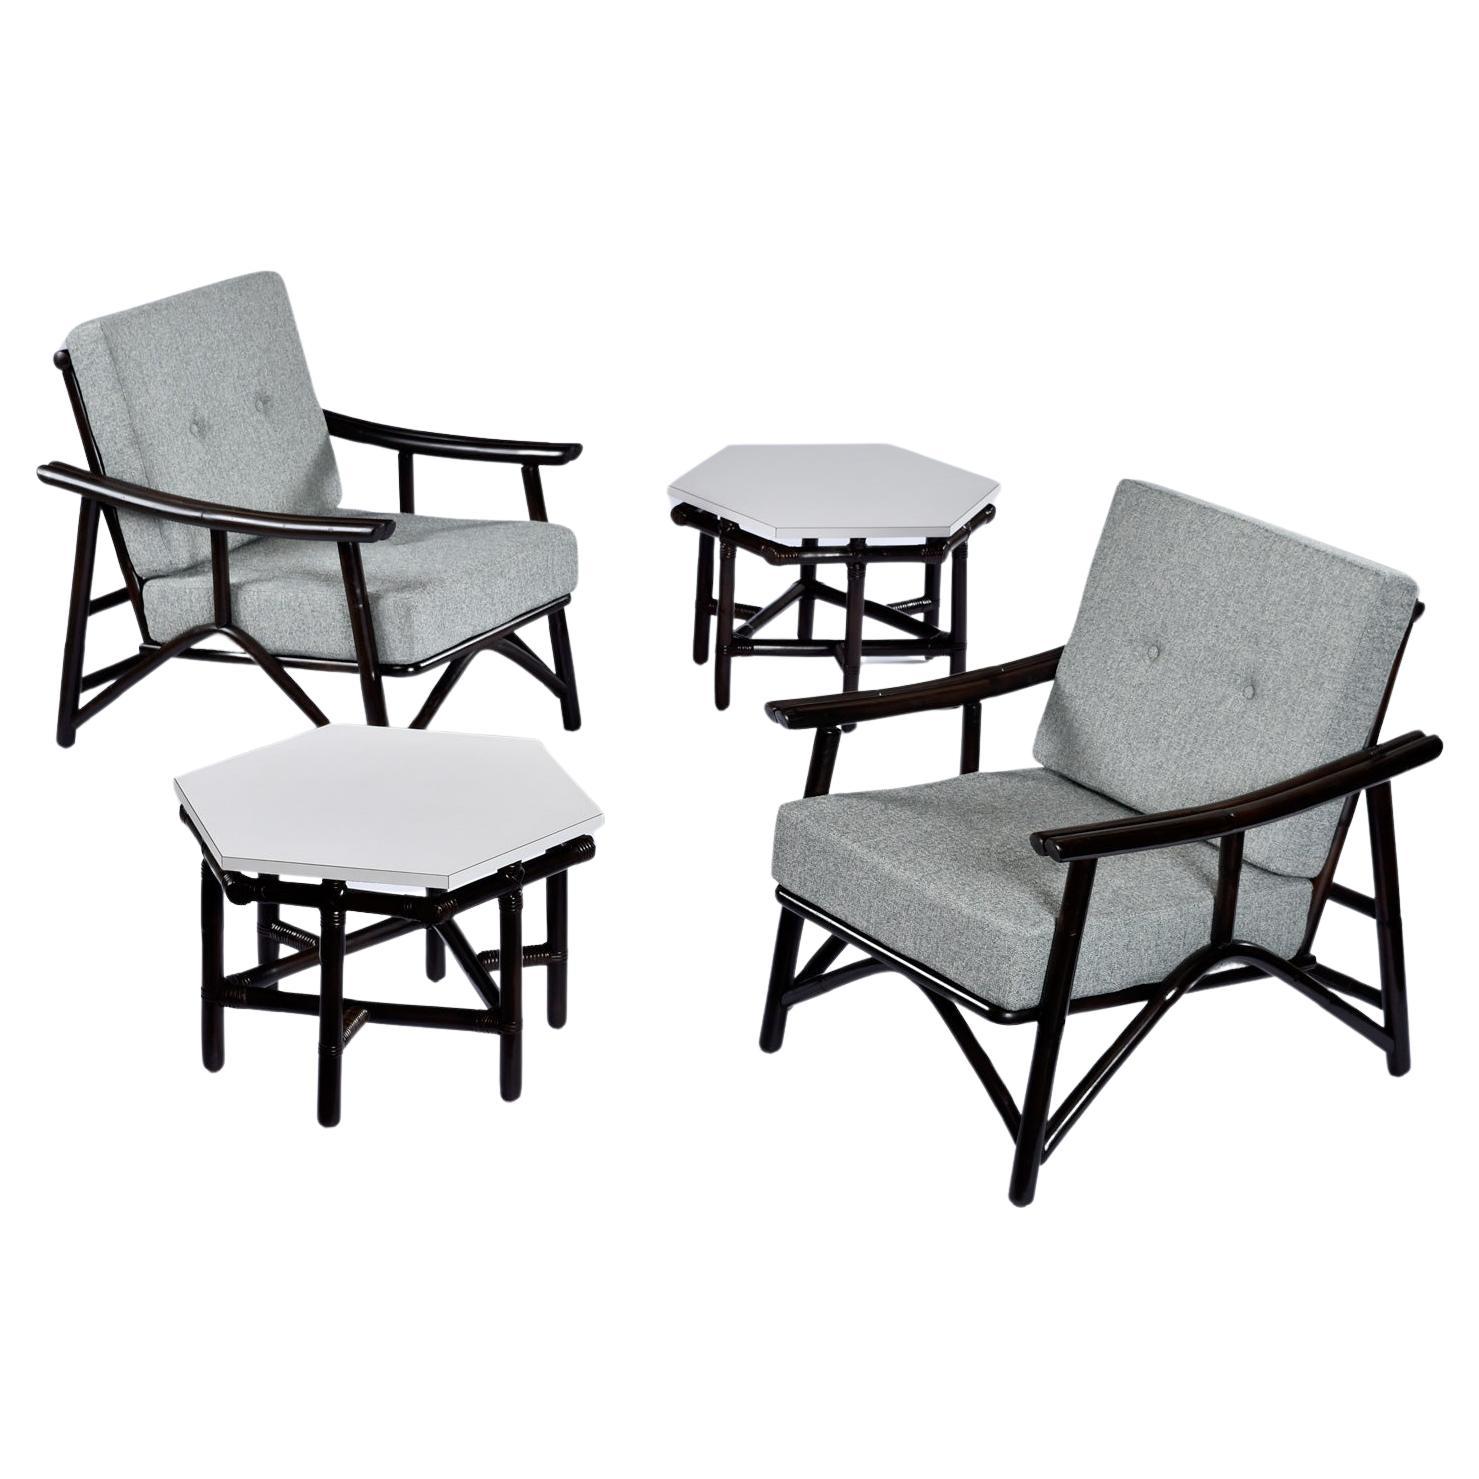 John Wisner Lounge Chairs